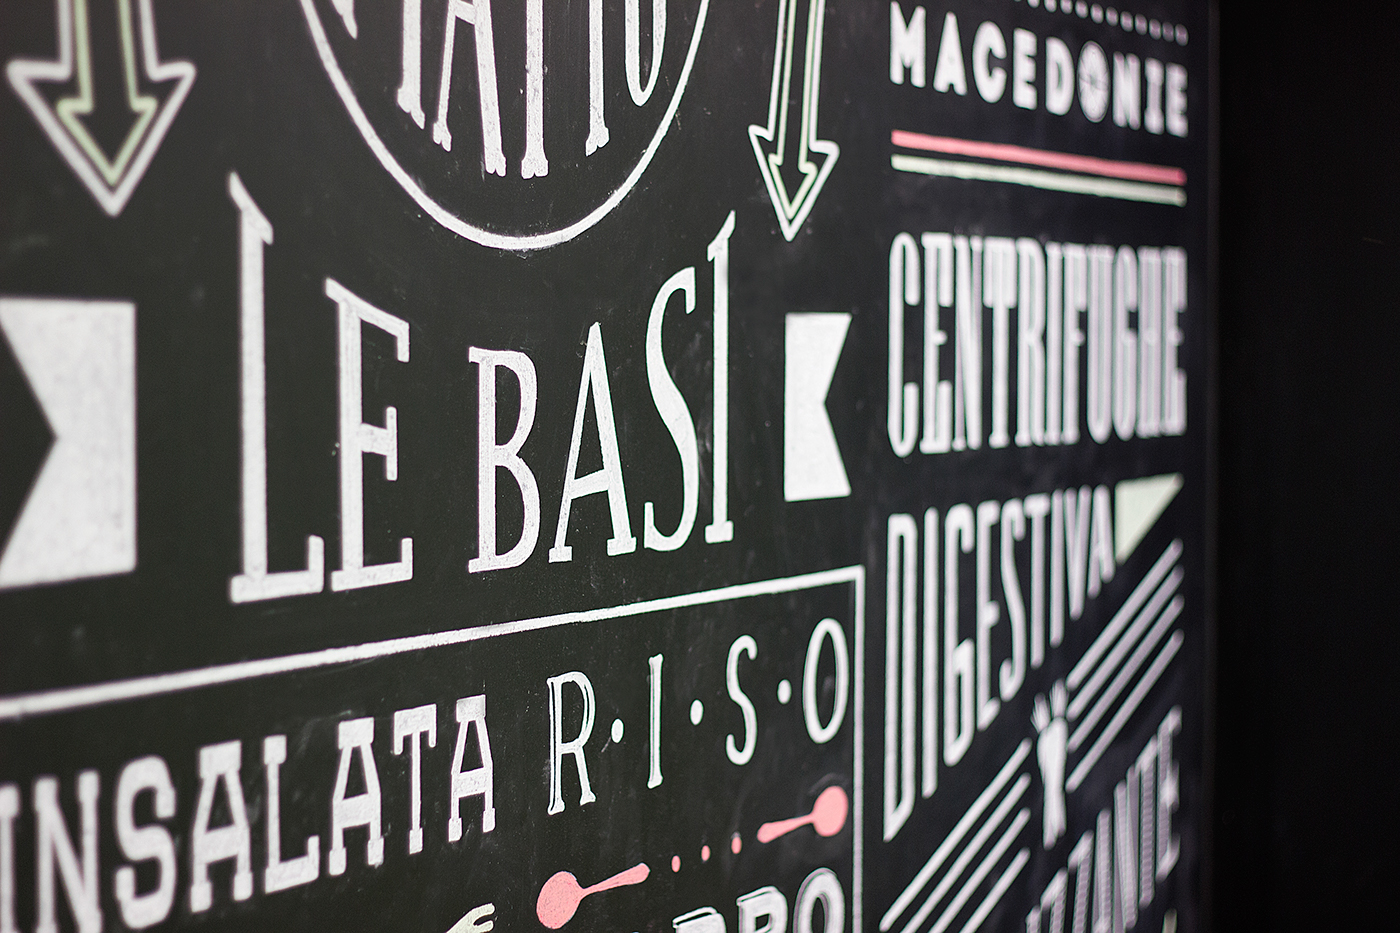 Chalkboard chalkboardlettering Handlettering chalks type handmade craft typography   lettering chalk menu 